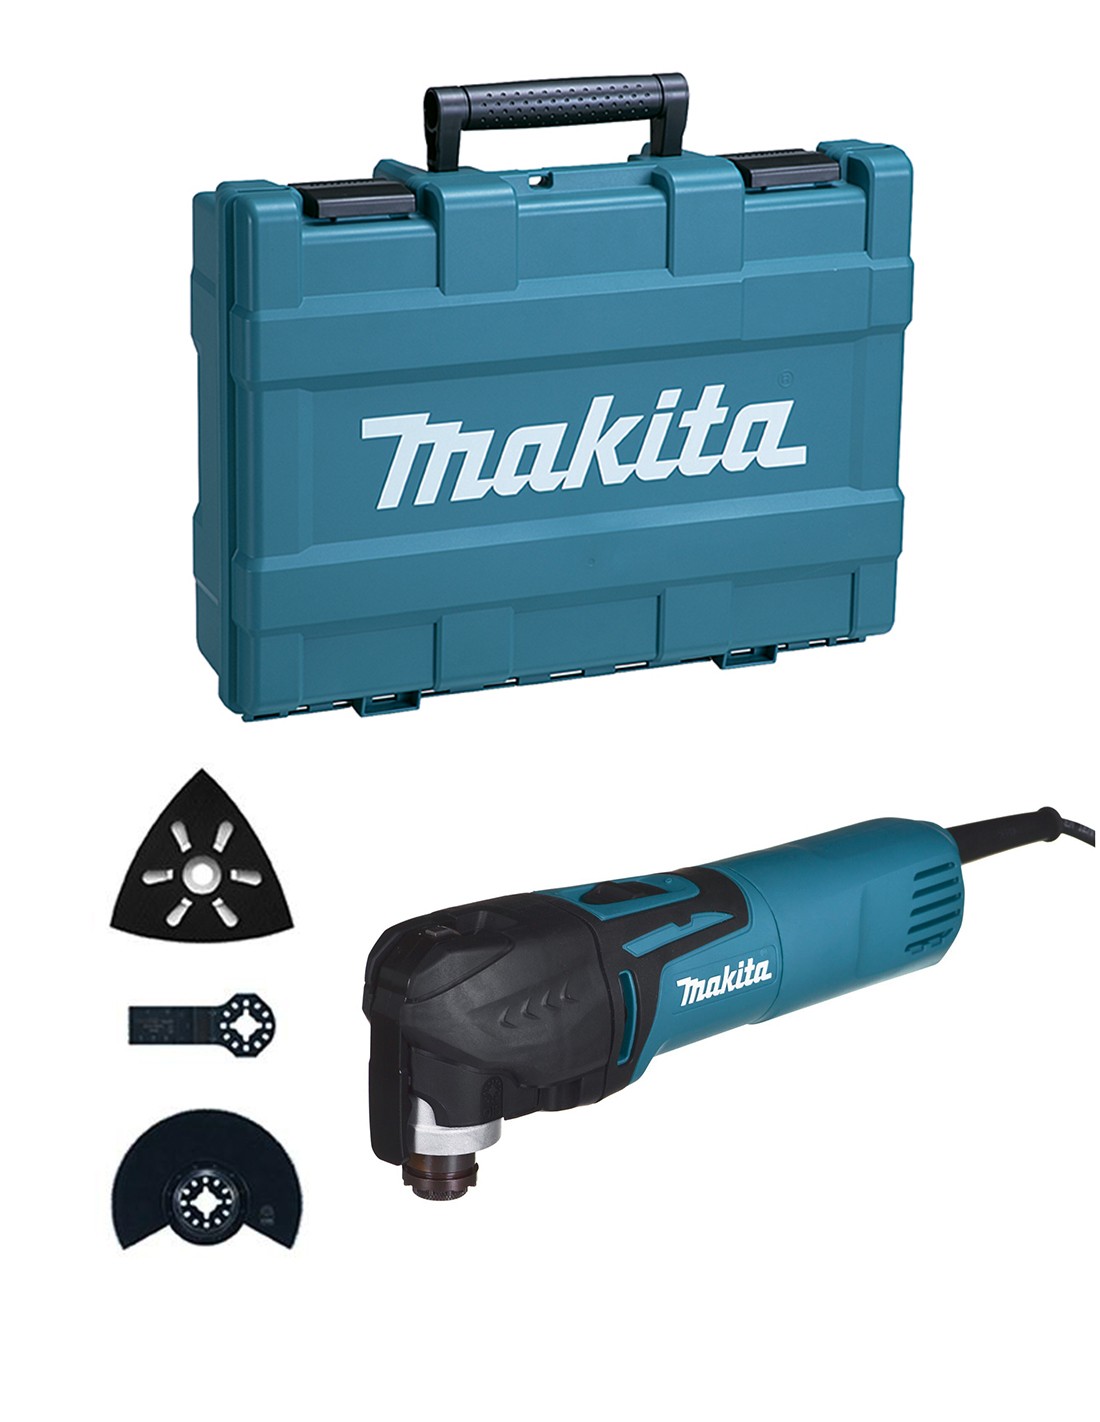 Scie oscillante multifonctions MAKITA TM3010CX6 - 320 W + accessoires  MAKITA TM3010CX6